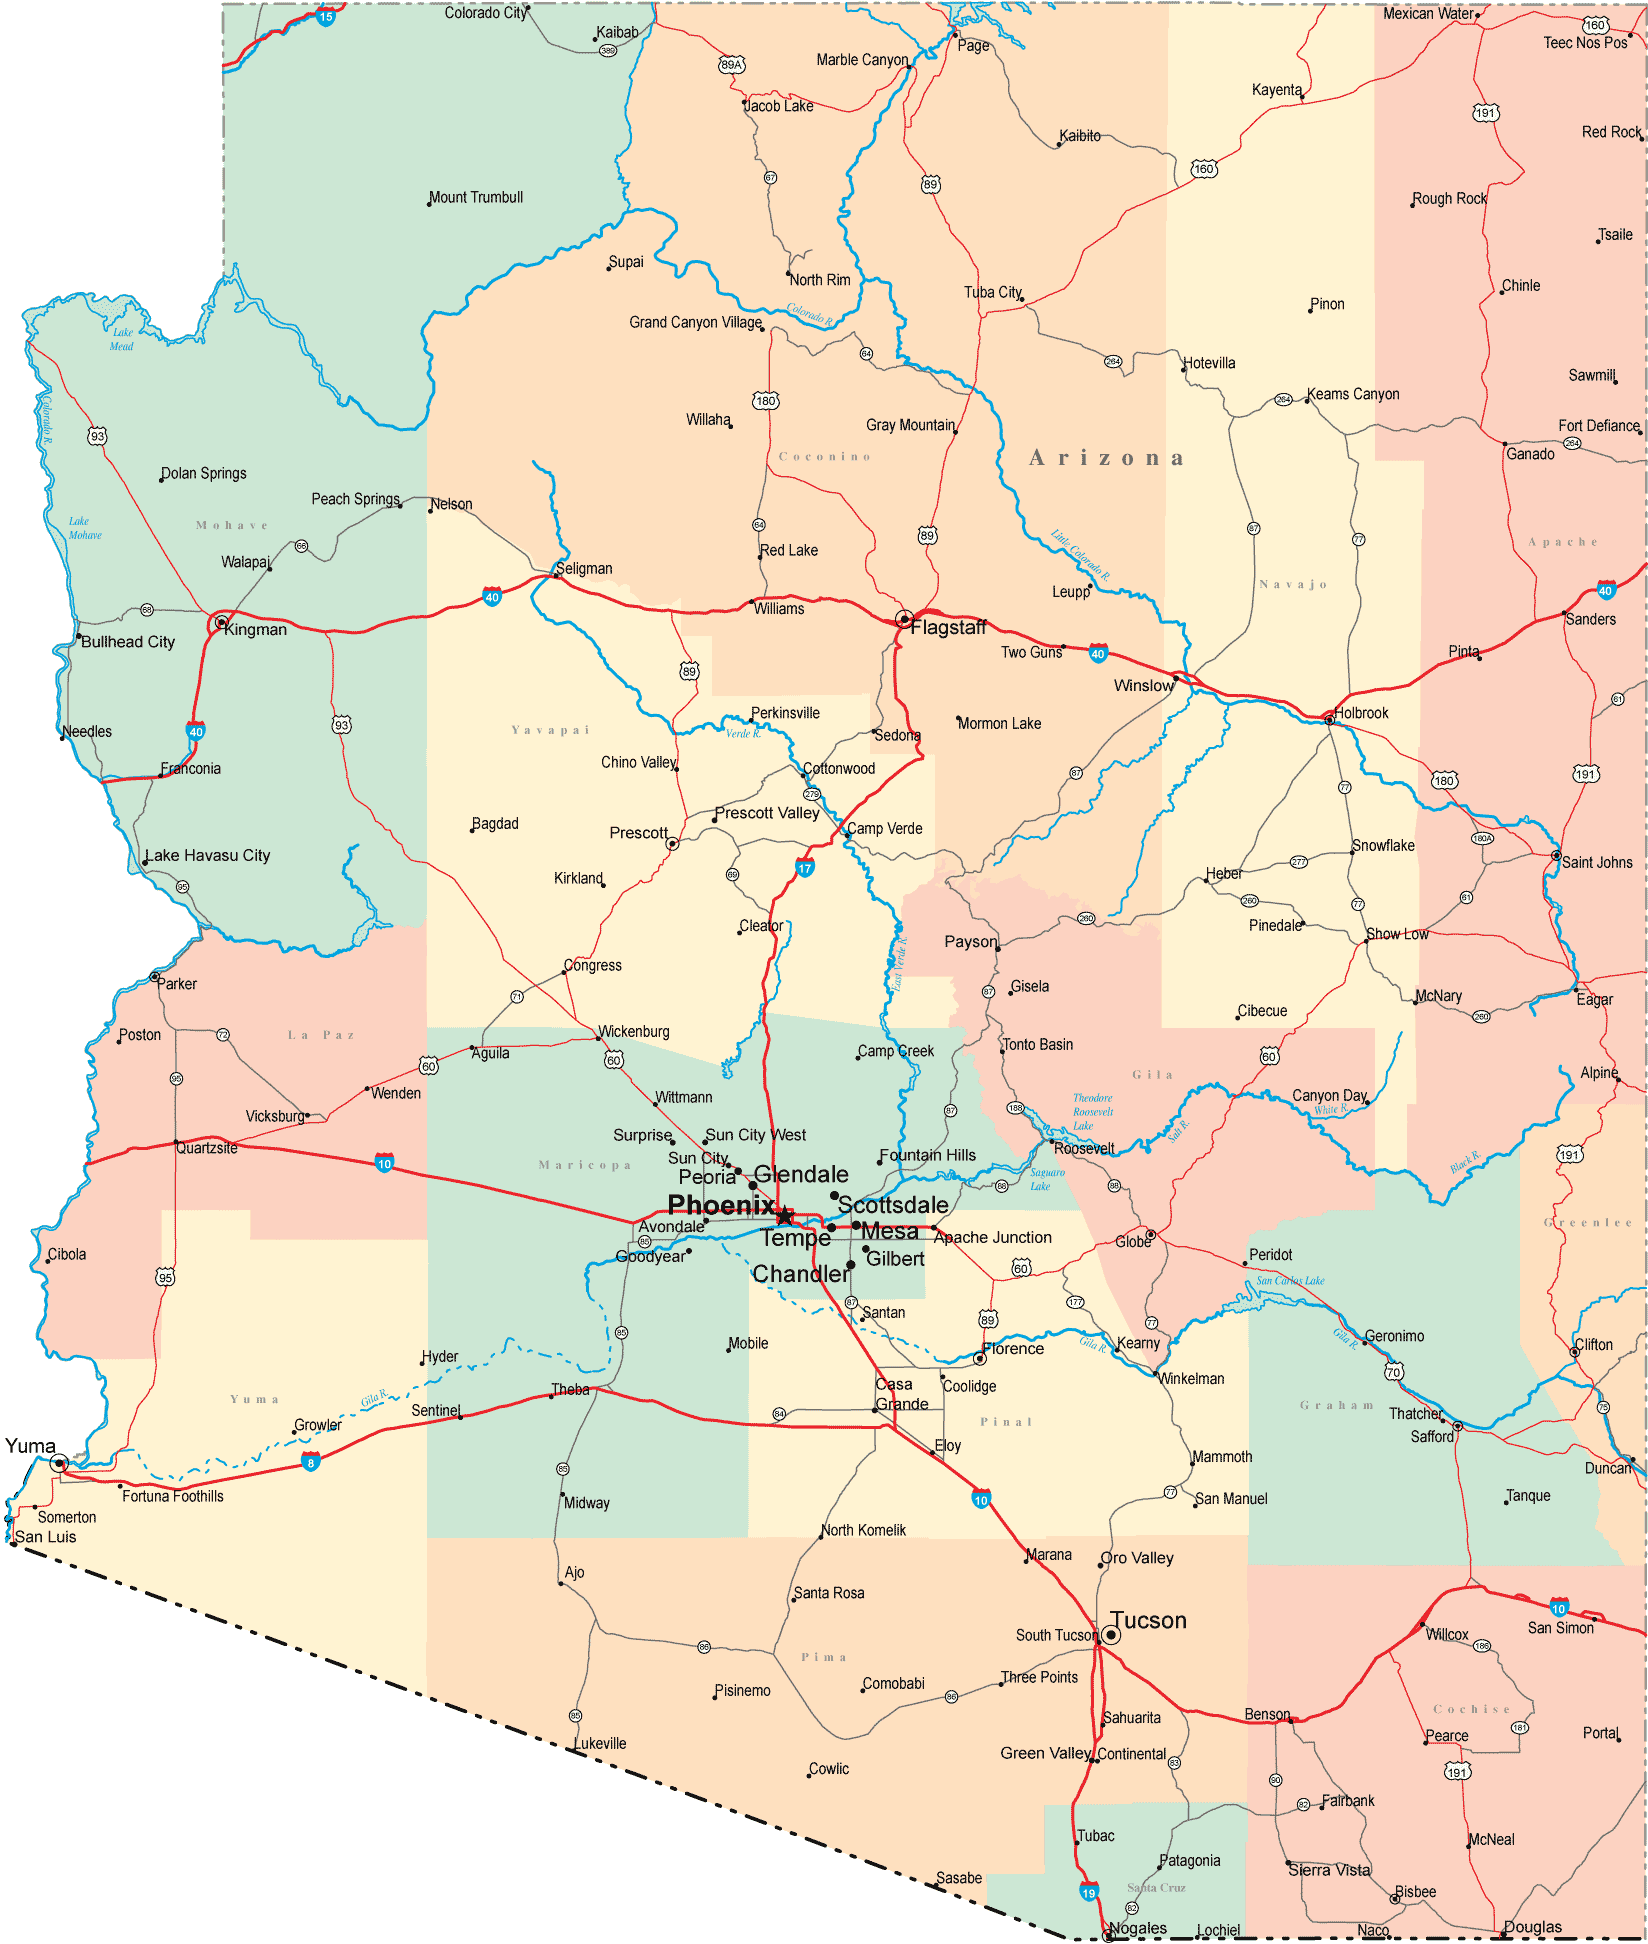 Road Maps Of Arizona Arizona Road Map   AZ Road Map   Arizona Highway Map